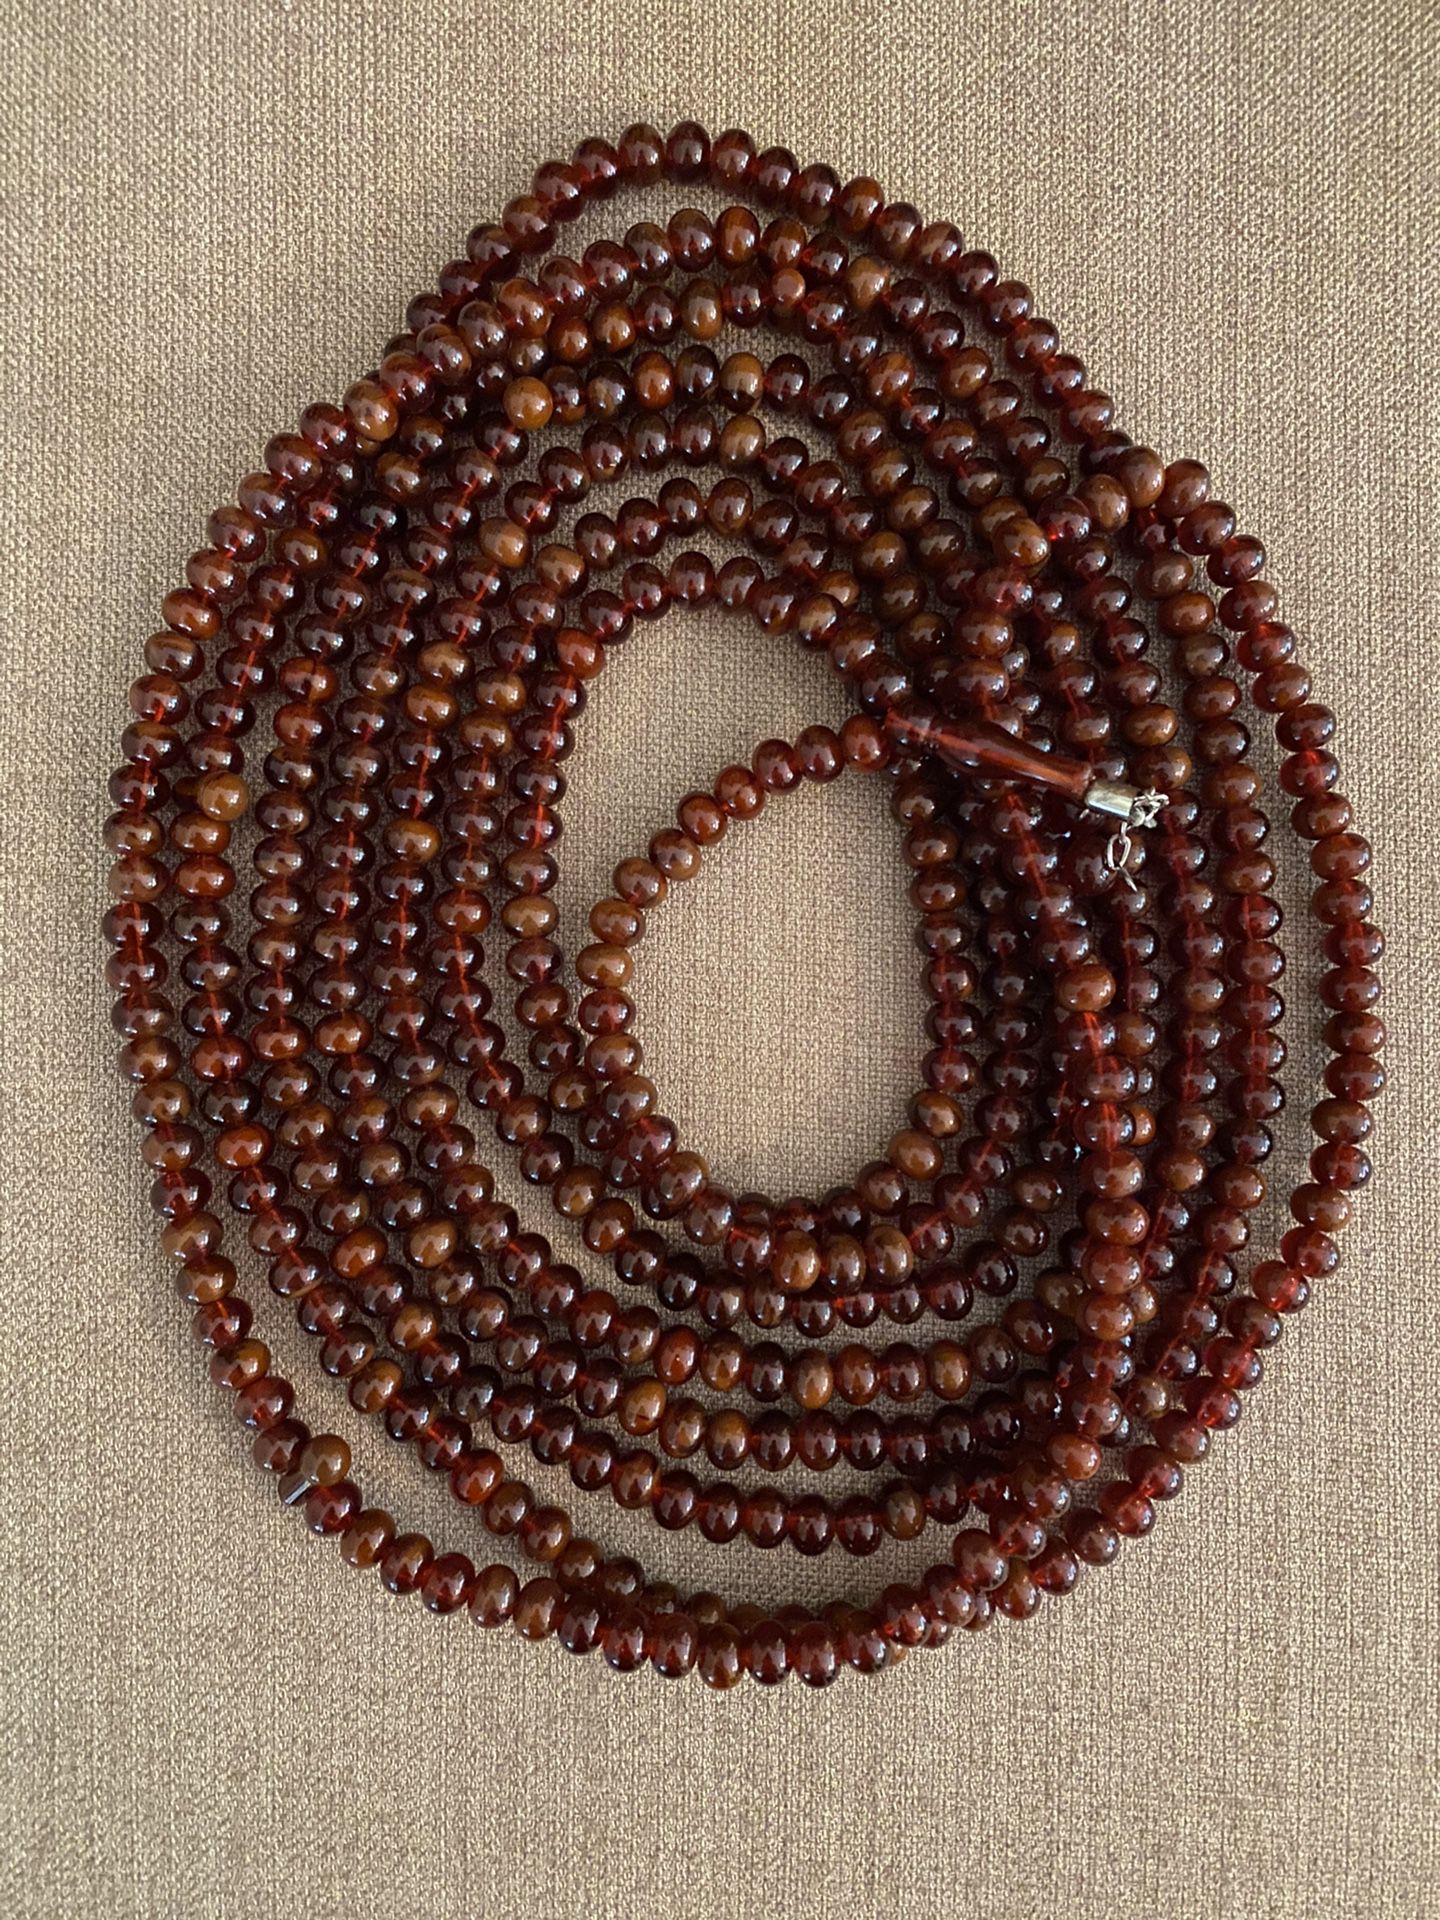 500 beads tasbeeh for muslims. Islamic gift